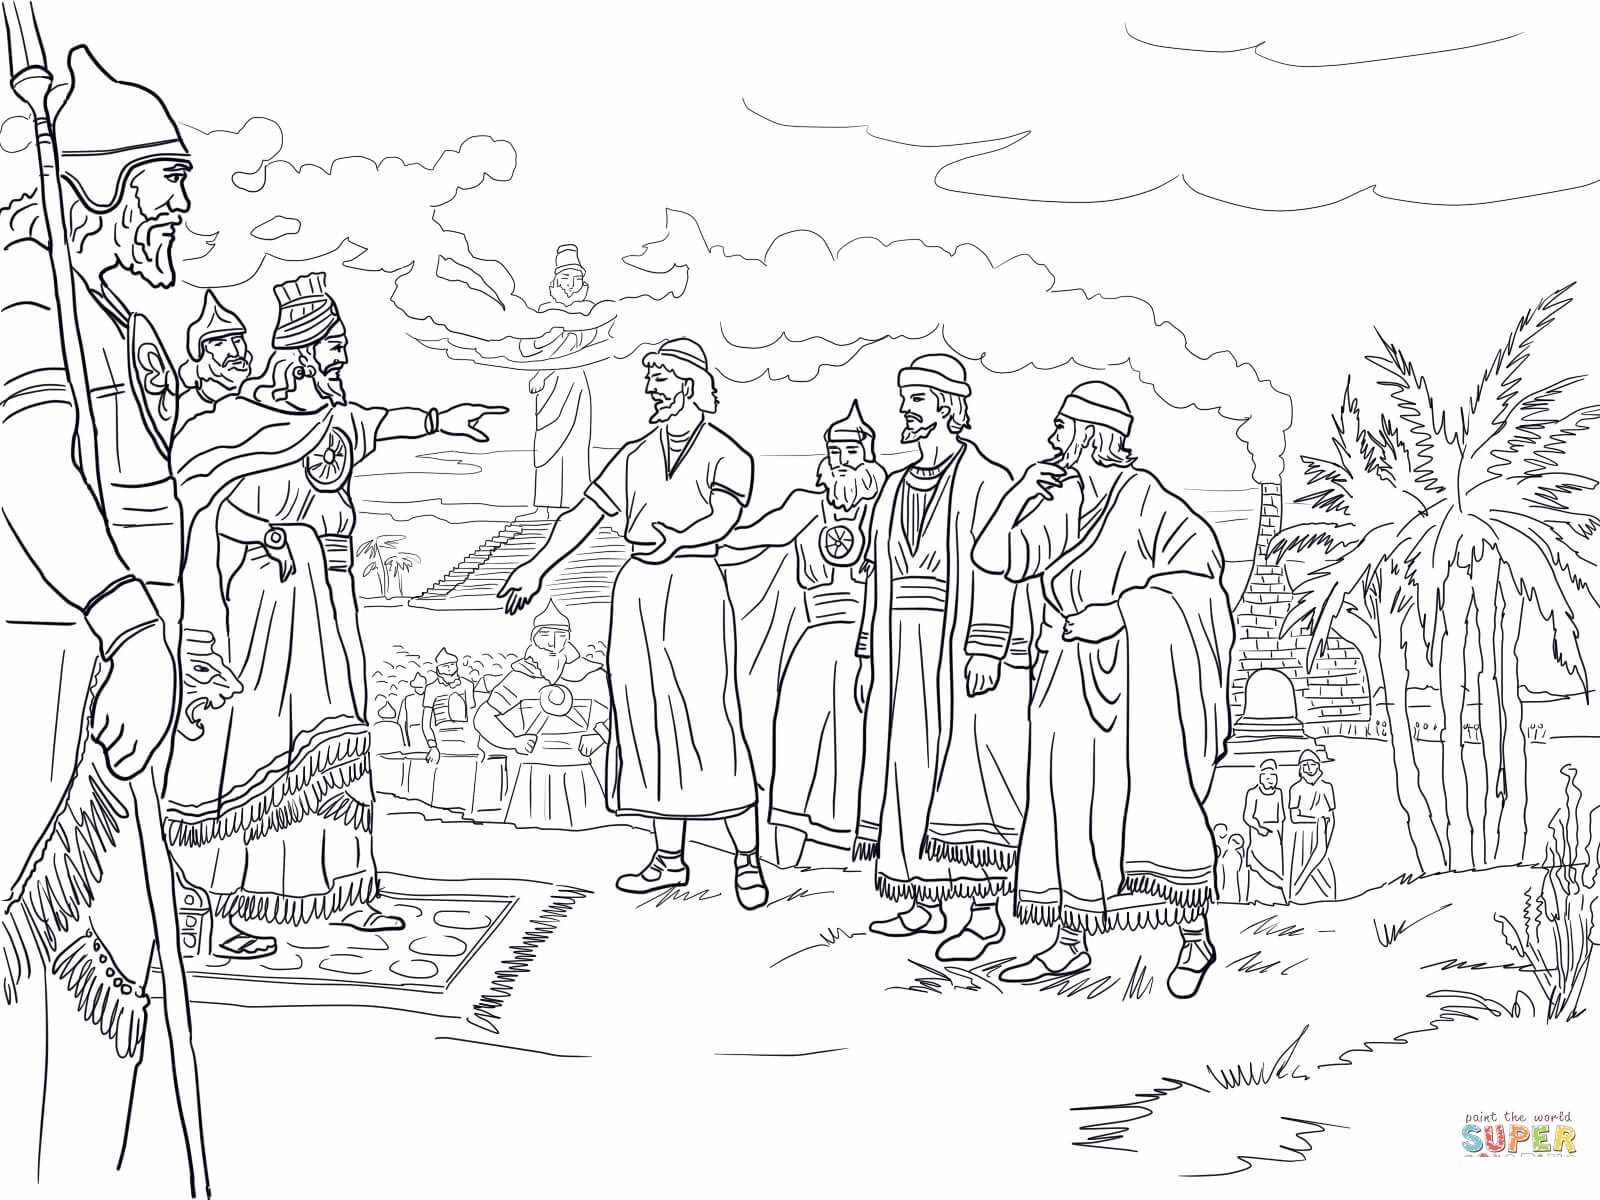 Shadrach, Meshach og Abednego foran kong Nebukadnezar